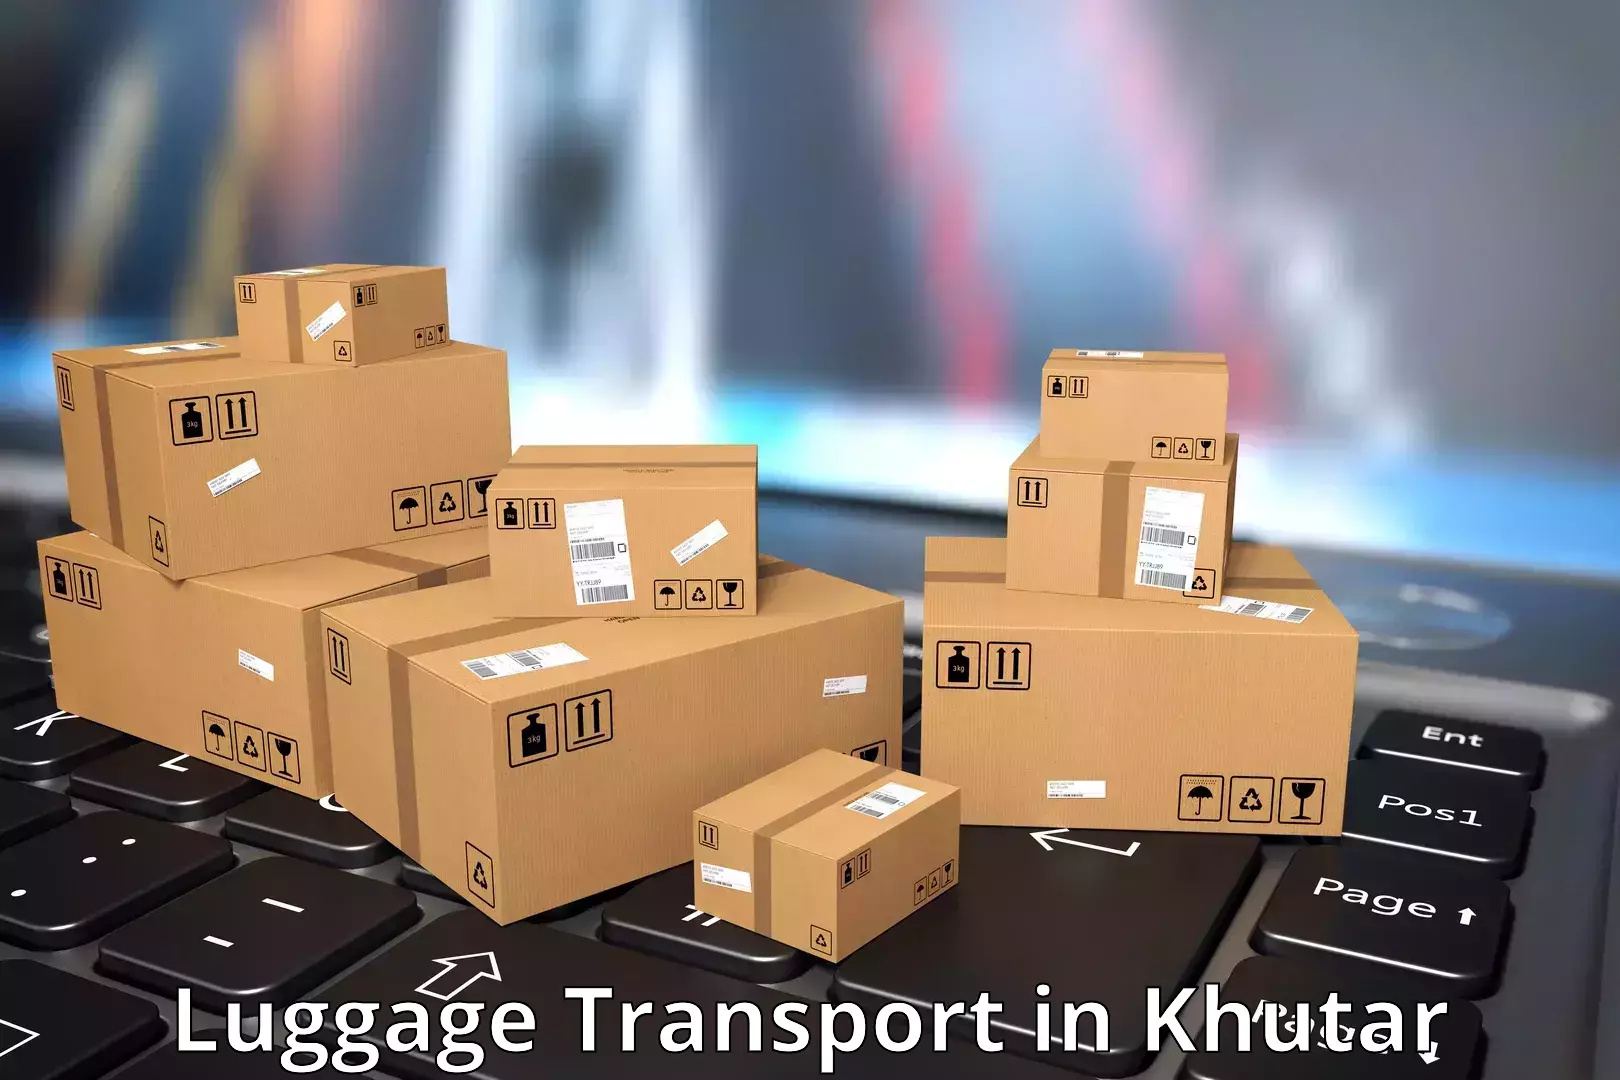 Baggage transport technology in Khutar